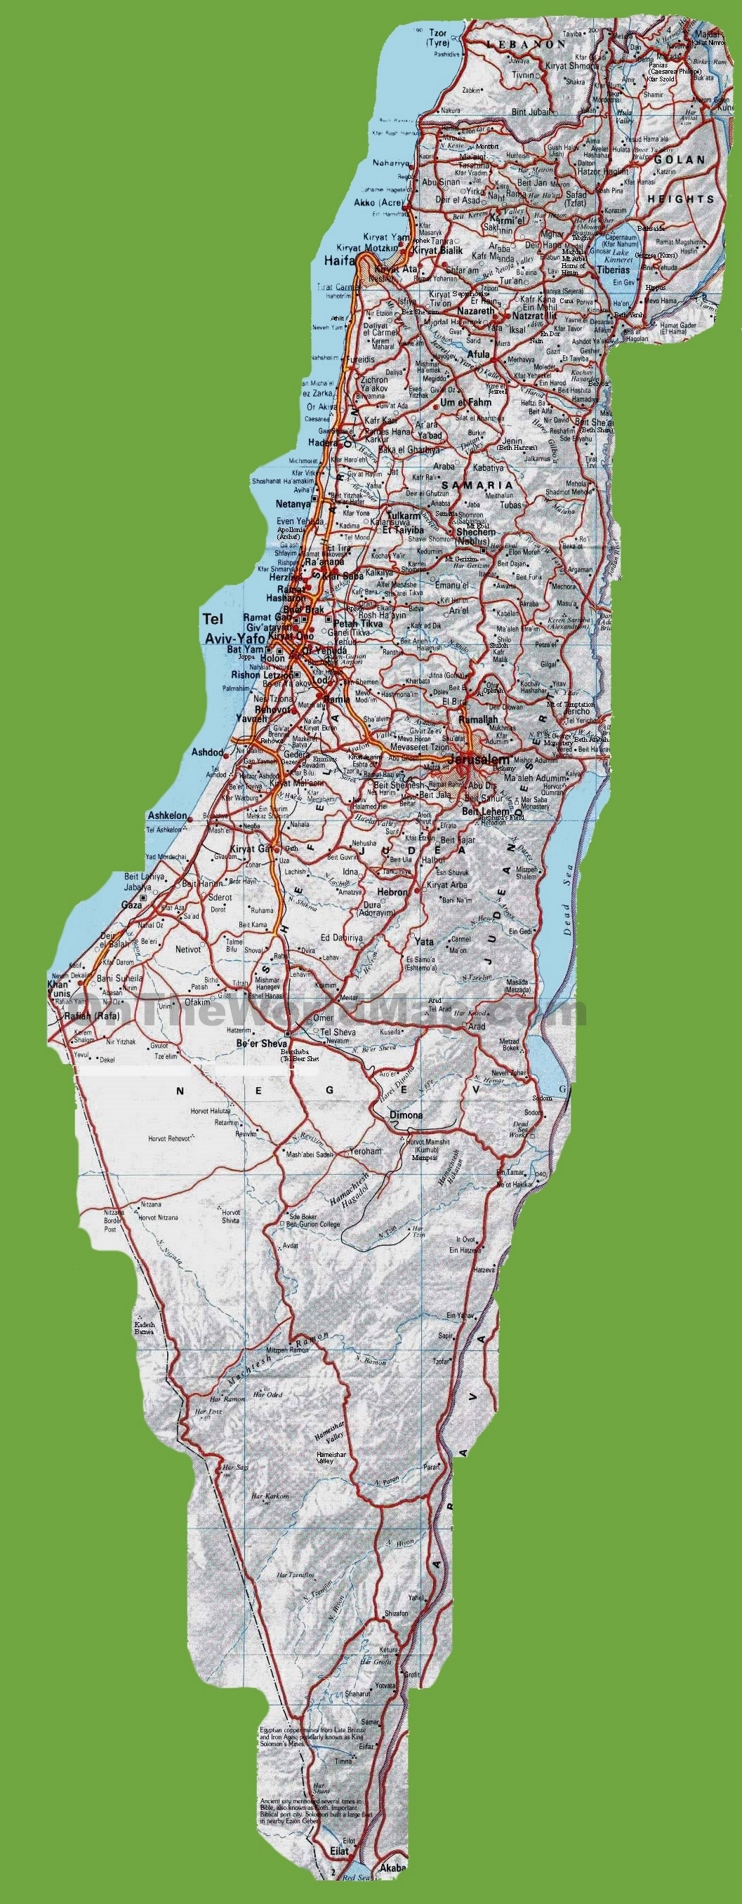 Israel road map